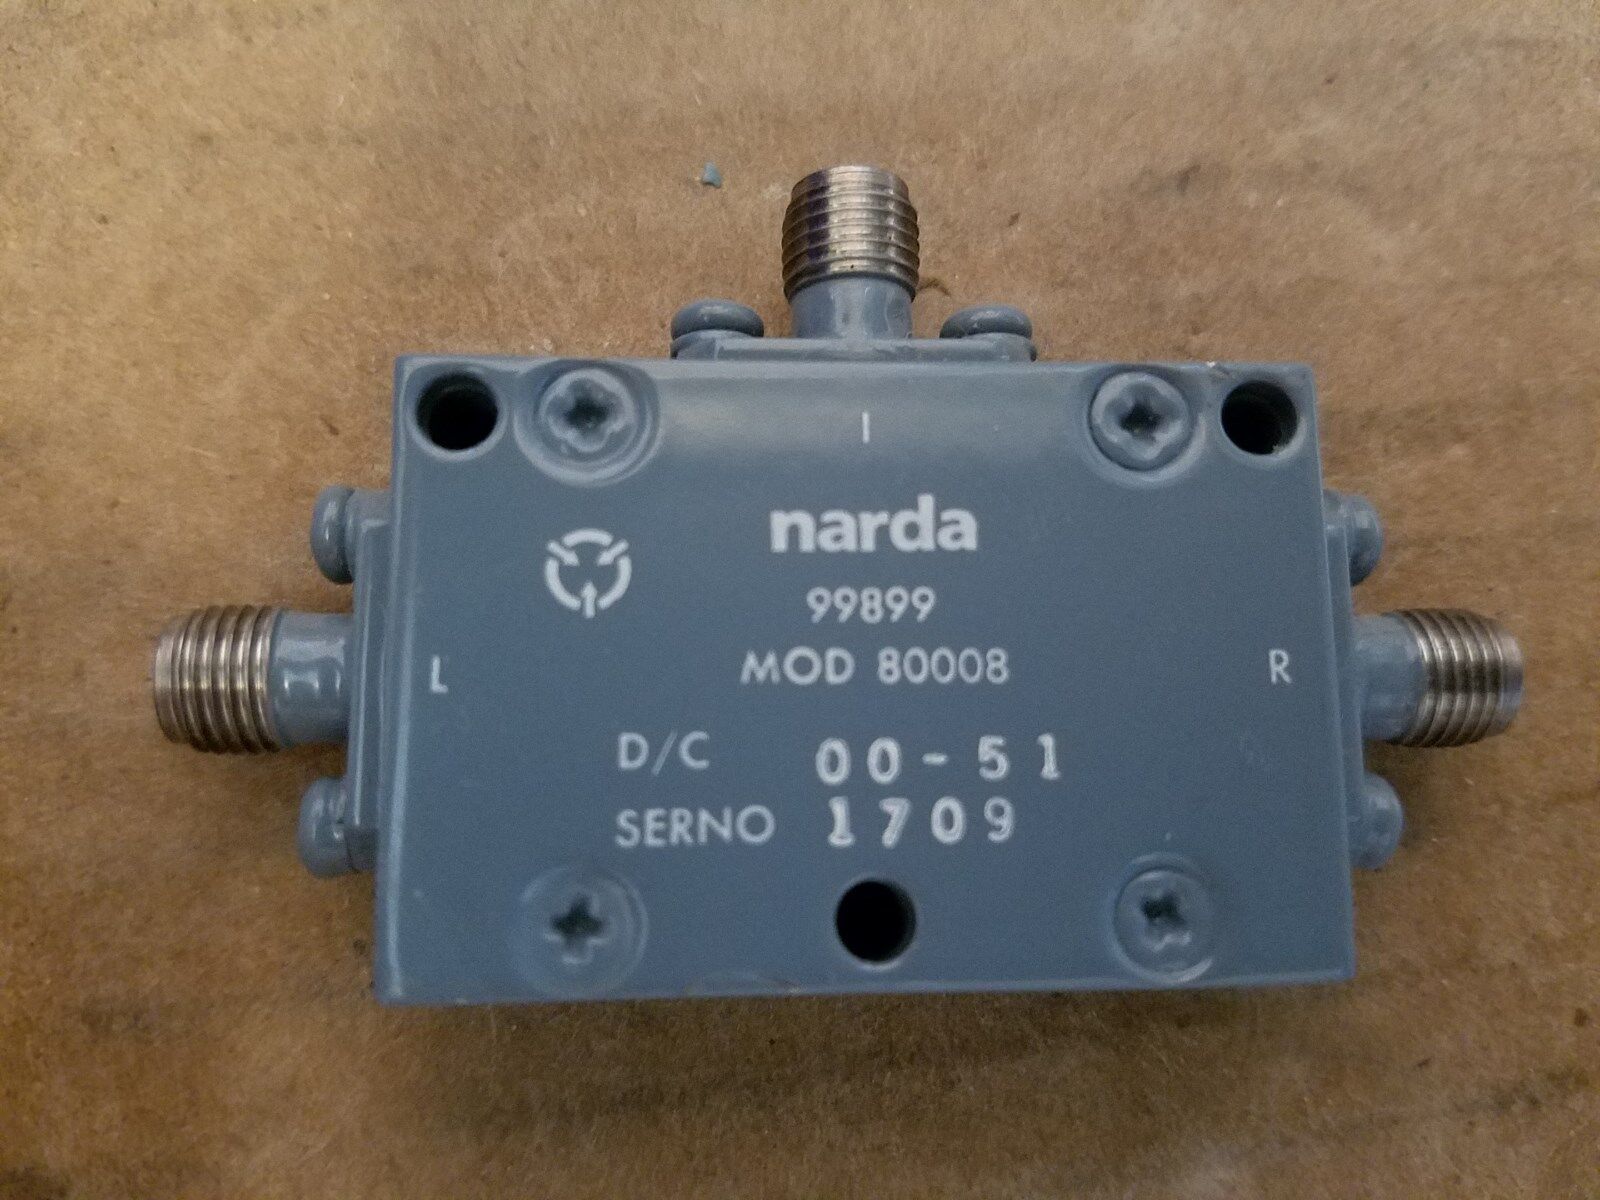 Narda Microwave Mod 80008 Double Balanced Frequency Mixer SMA(f) LO IF RF #1709